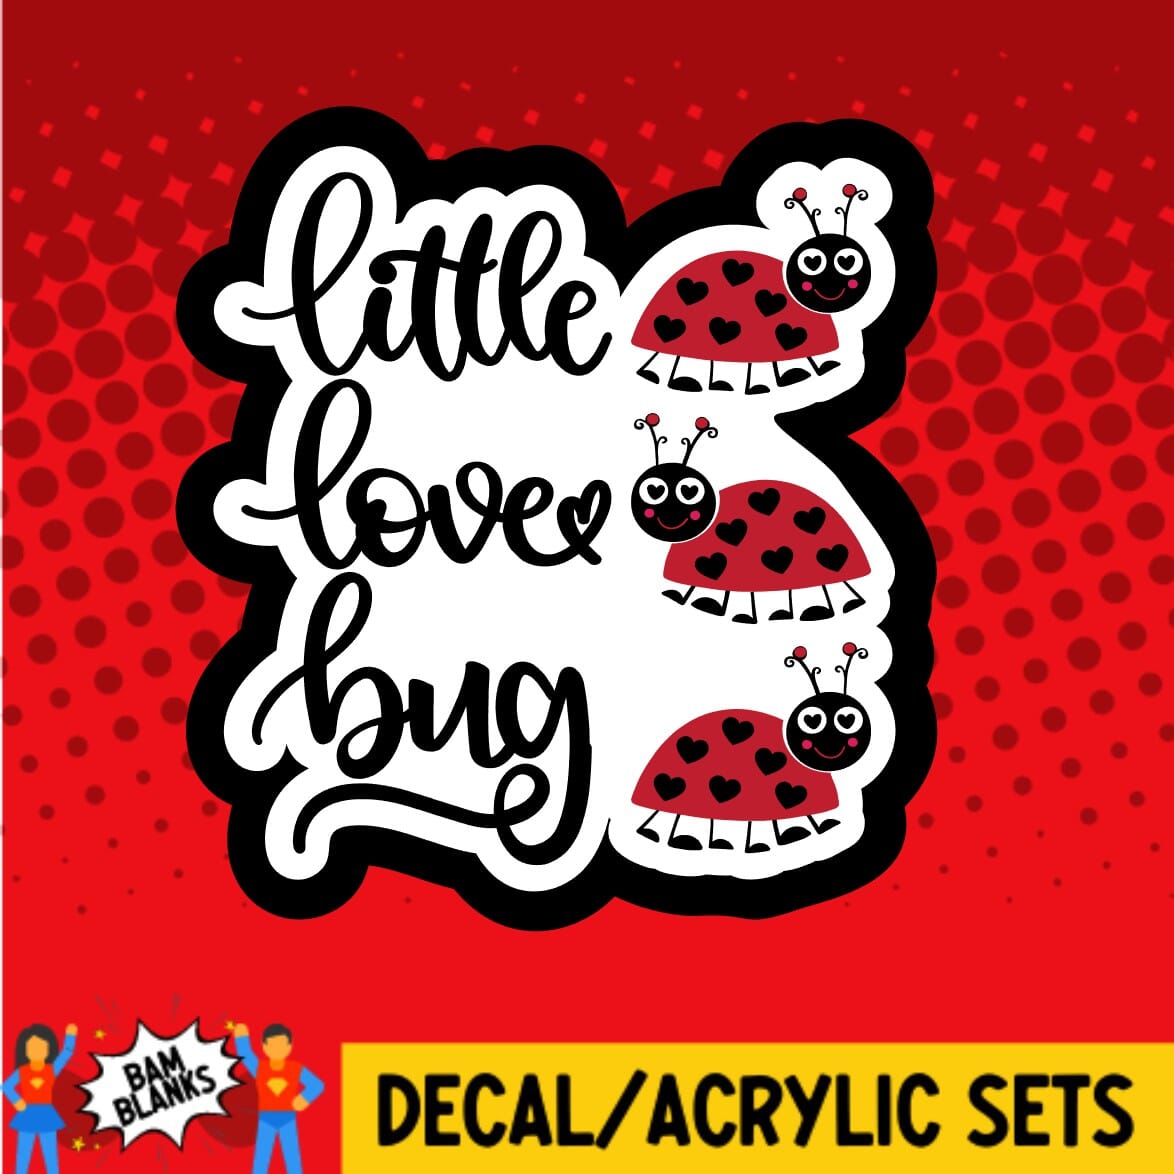 Little Love Bug 3 - DECAL AND ACRYLIC SHAPE #DA0540